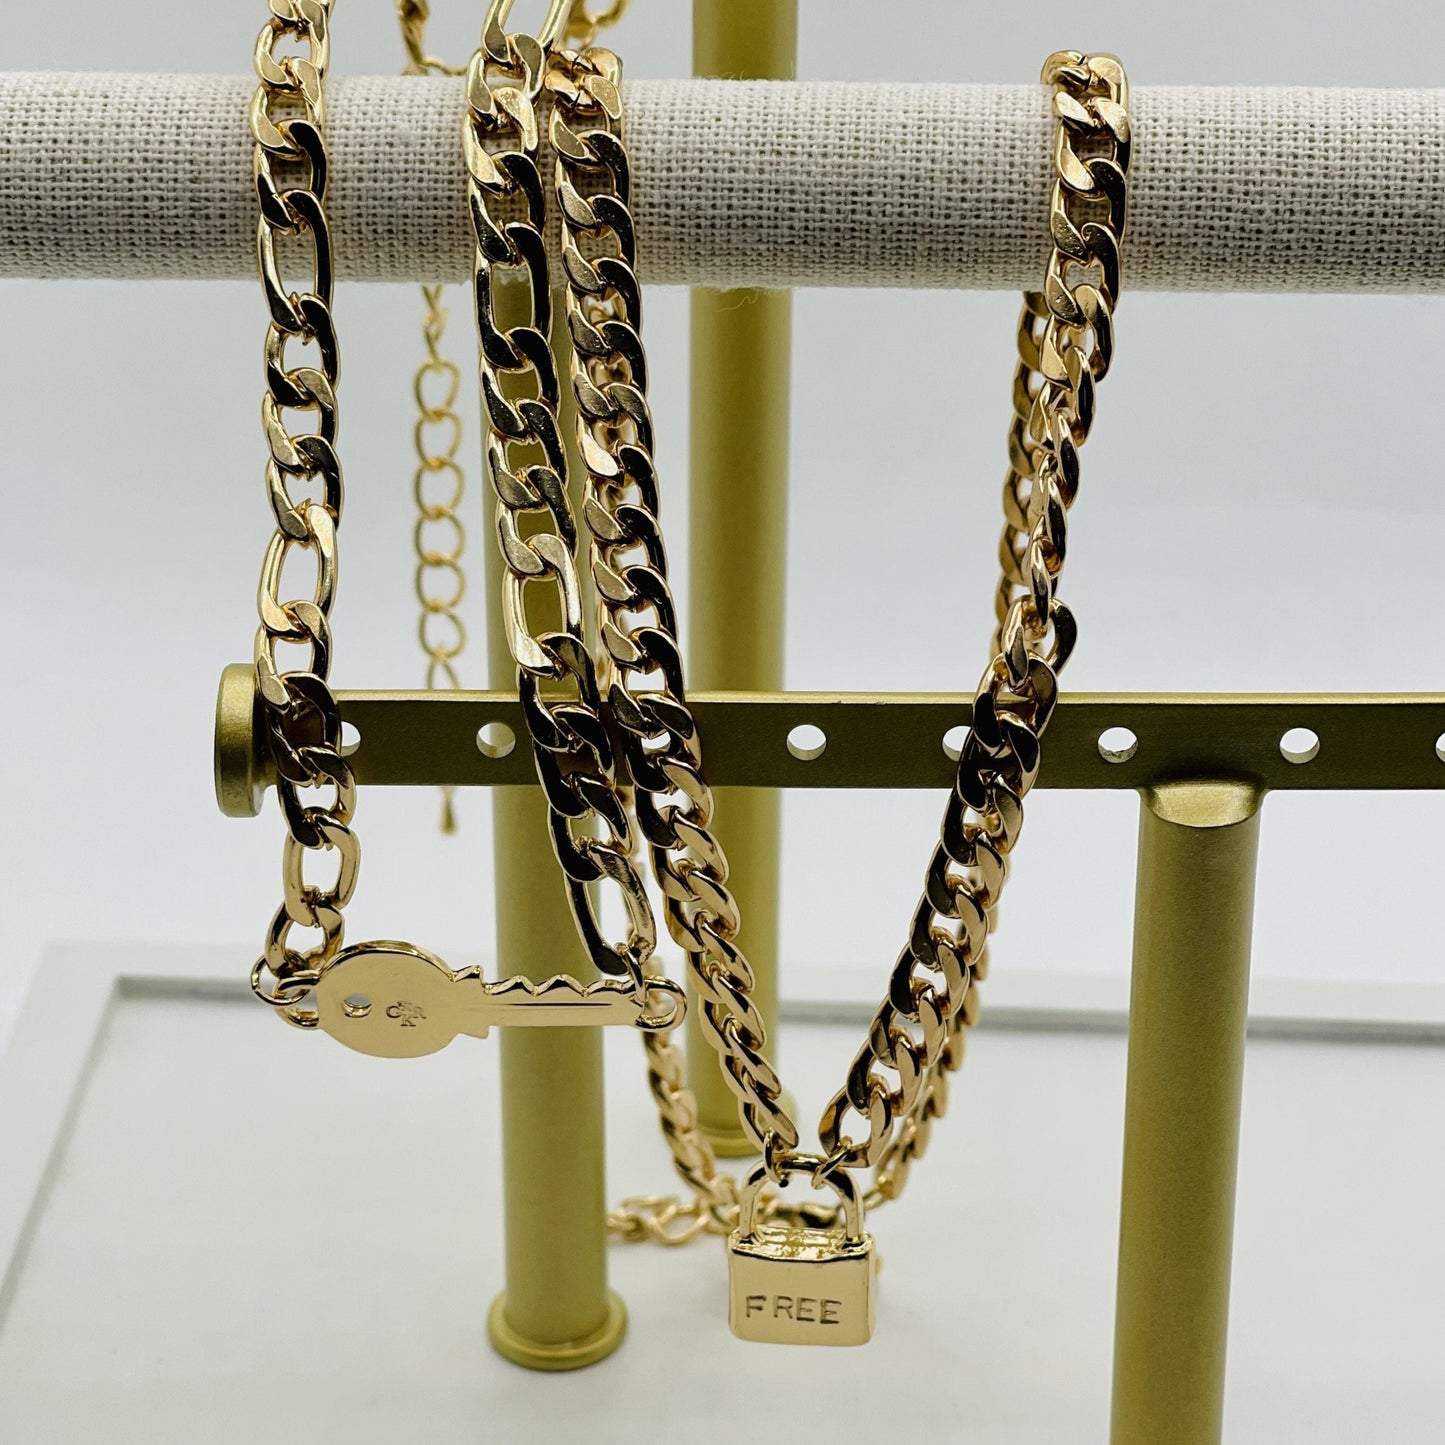 GKR "Signature" Chain FREE Layered Lock Key Charm Necklace - GIFTKEYSROCK 